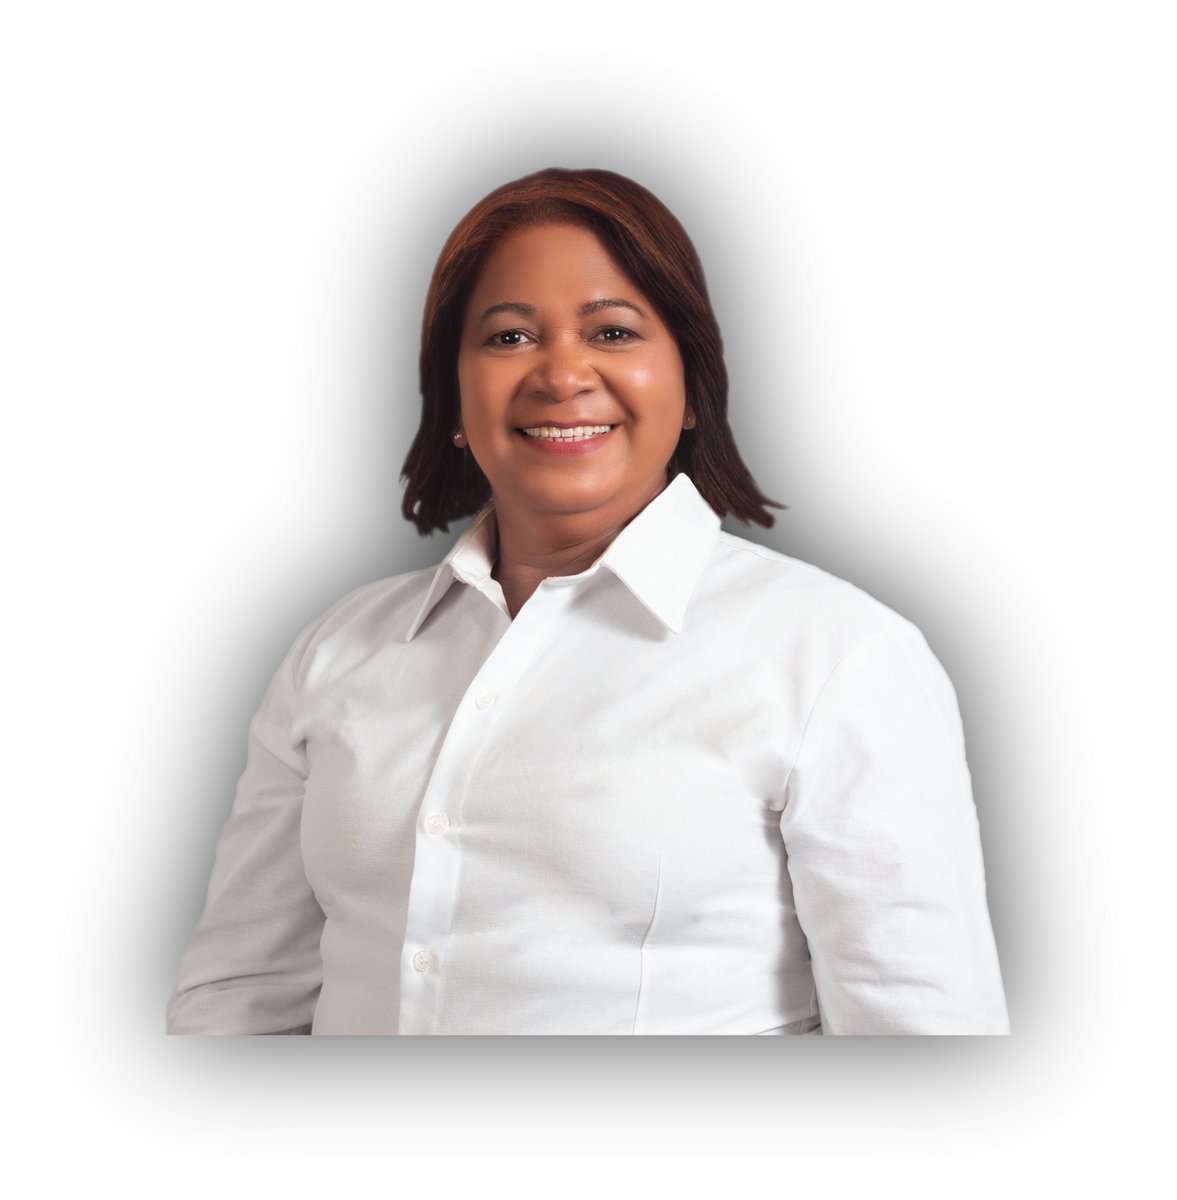 Catalina Olea Salazar electa diputada al Parlacen por Justicia Social; activista social Milly Henríquez será su suplente
@JSocialDO